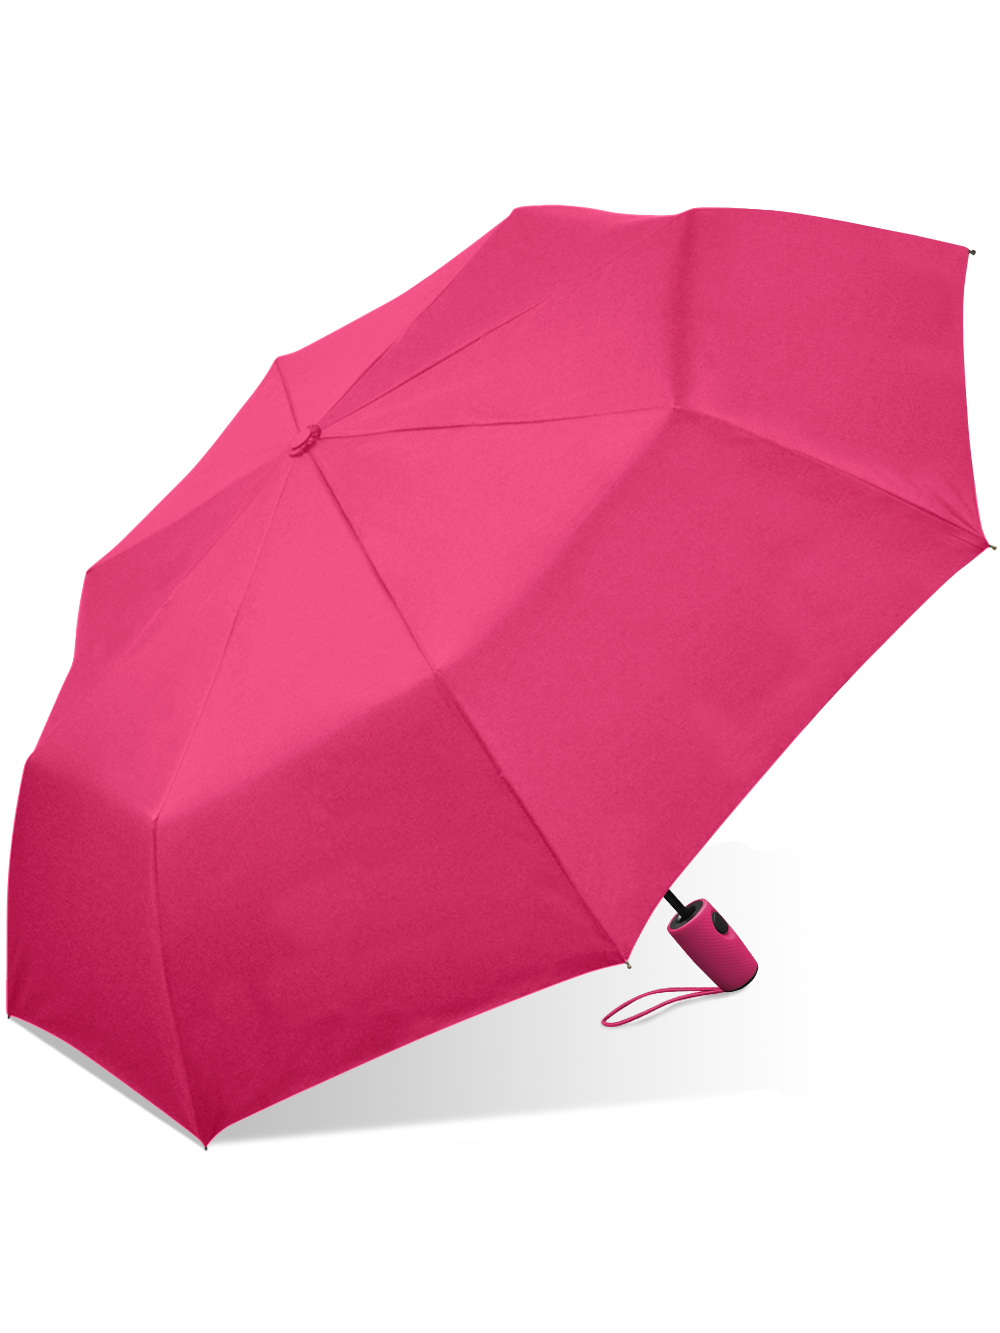 Weather Station Automatic Super Mini Rain Umbrella Pink - image 1 of 5